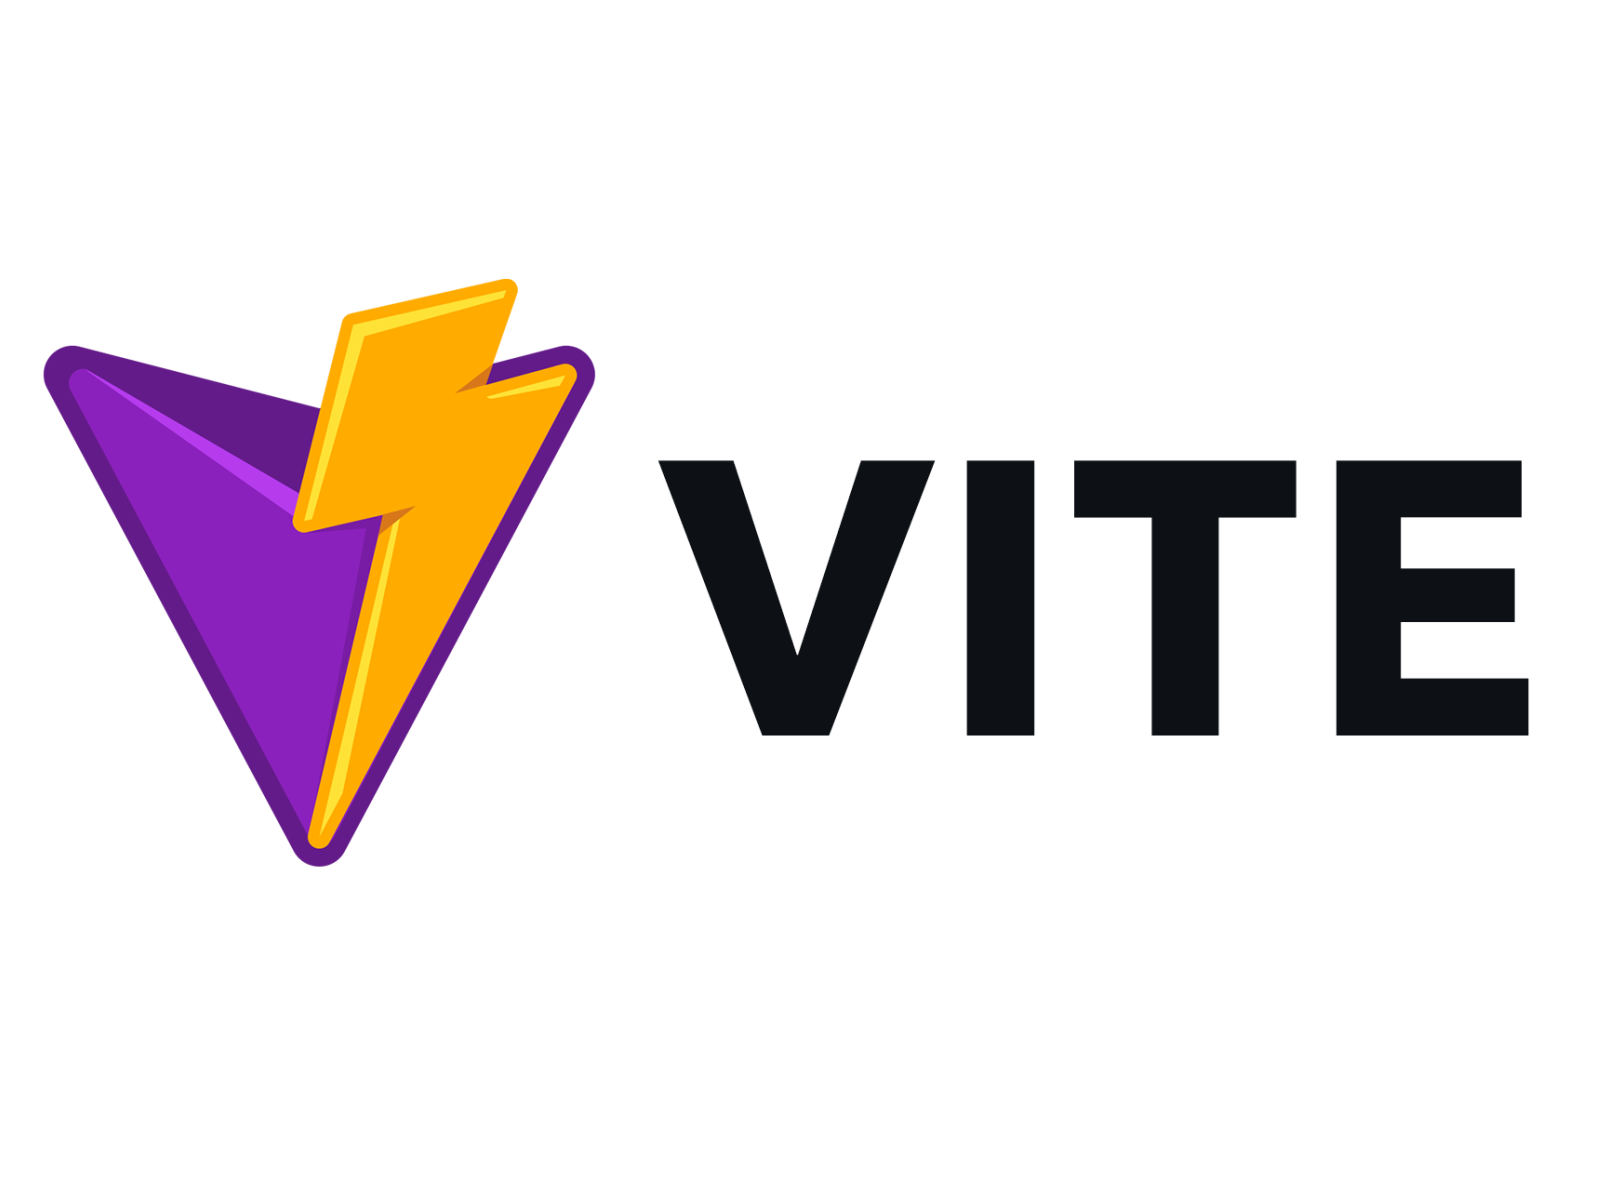 Vite logo idea by Marcis Bergmanis on Dribbble